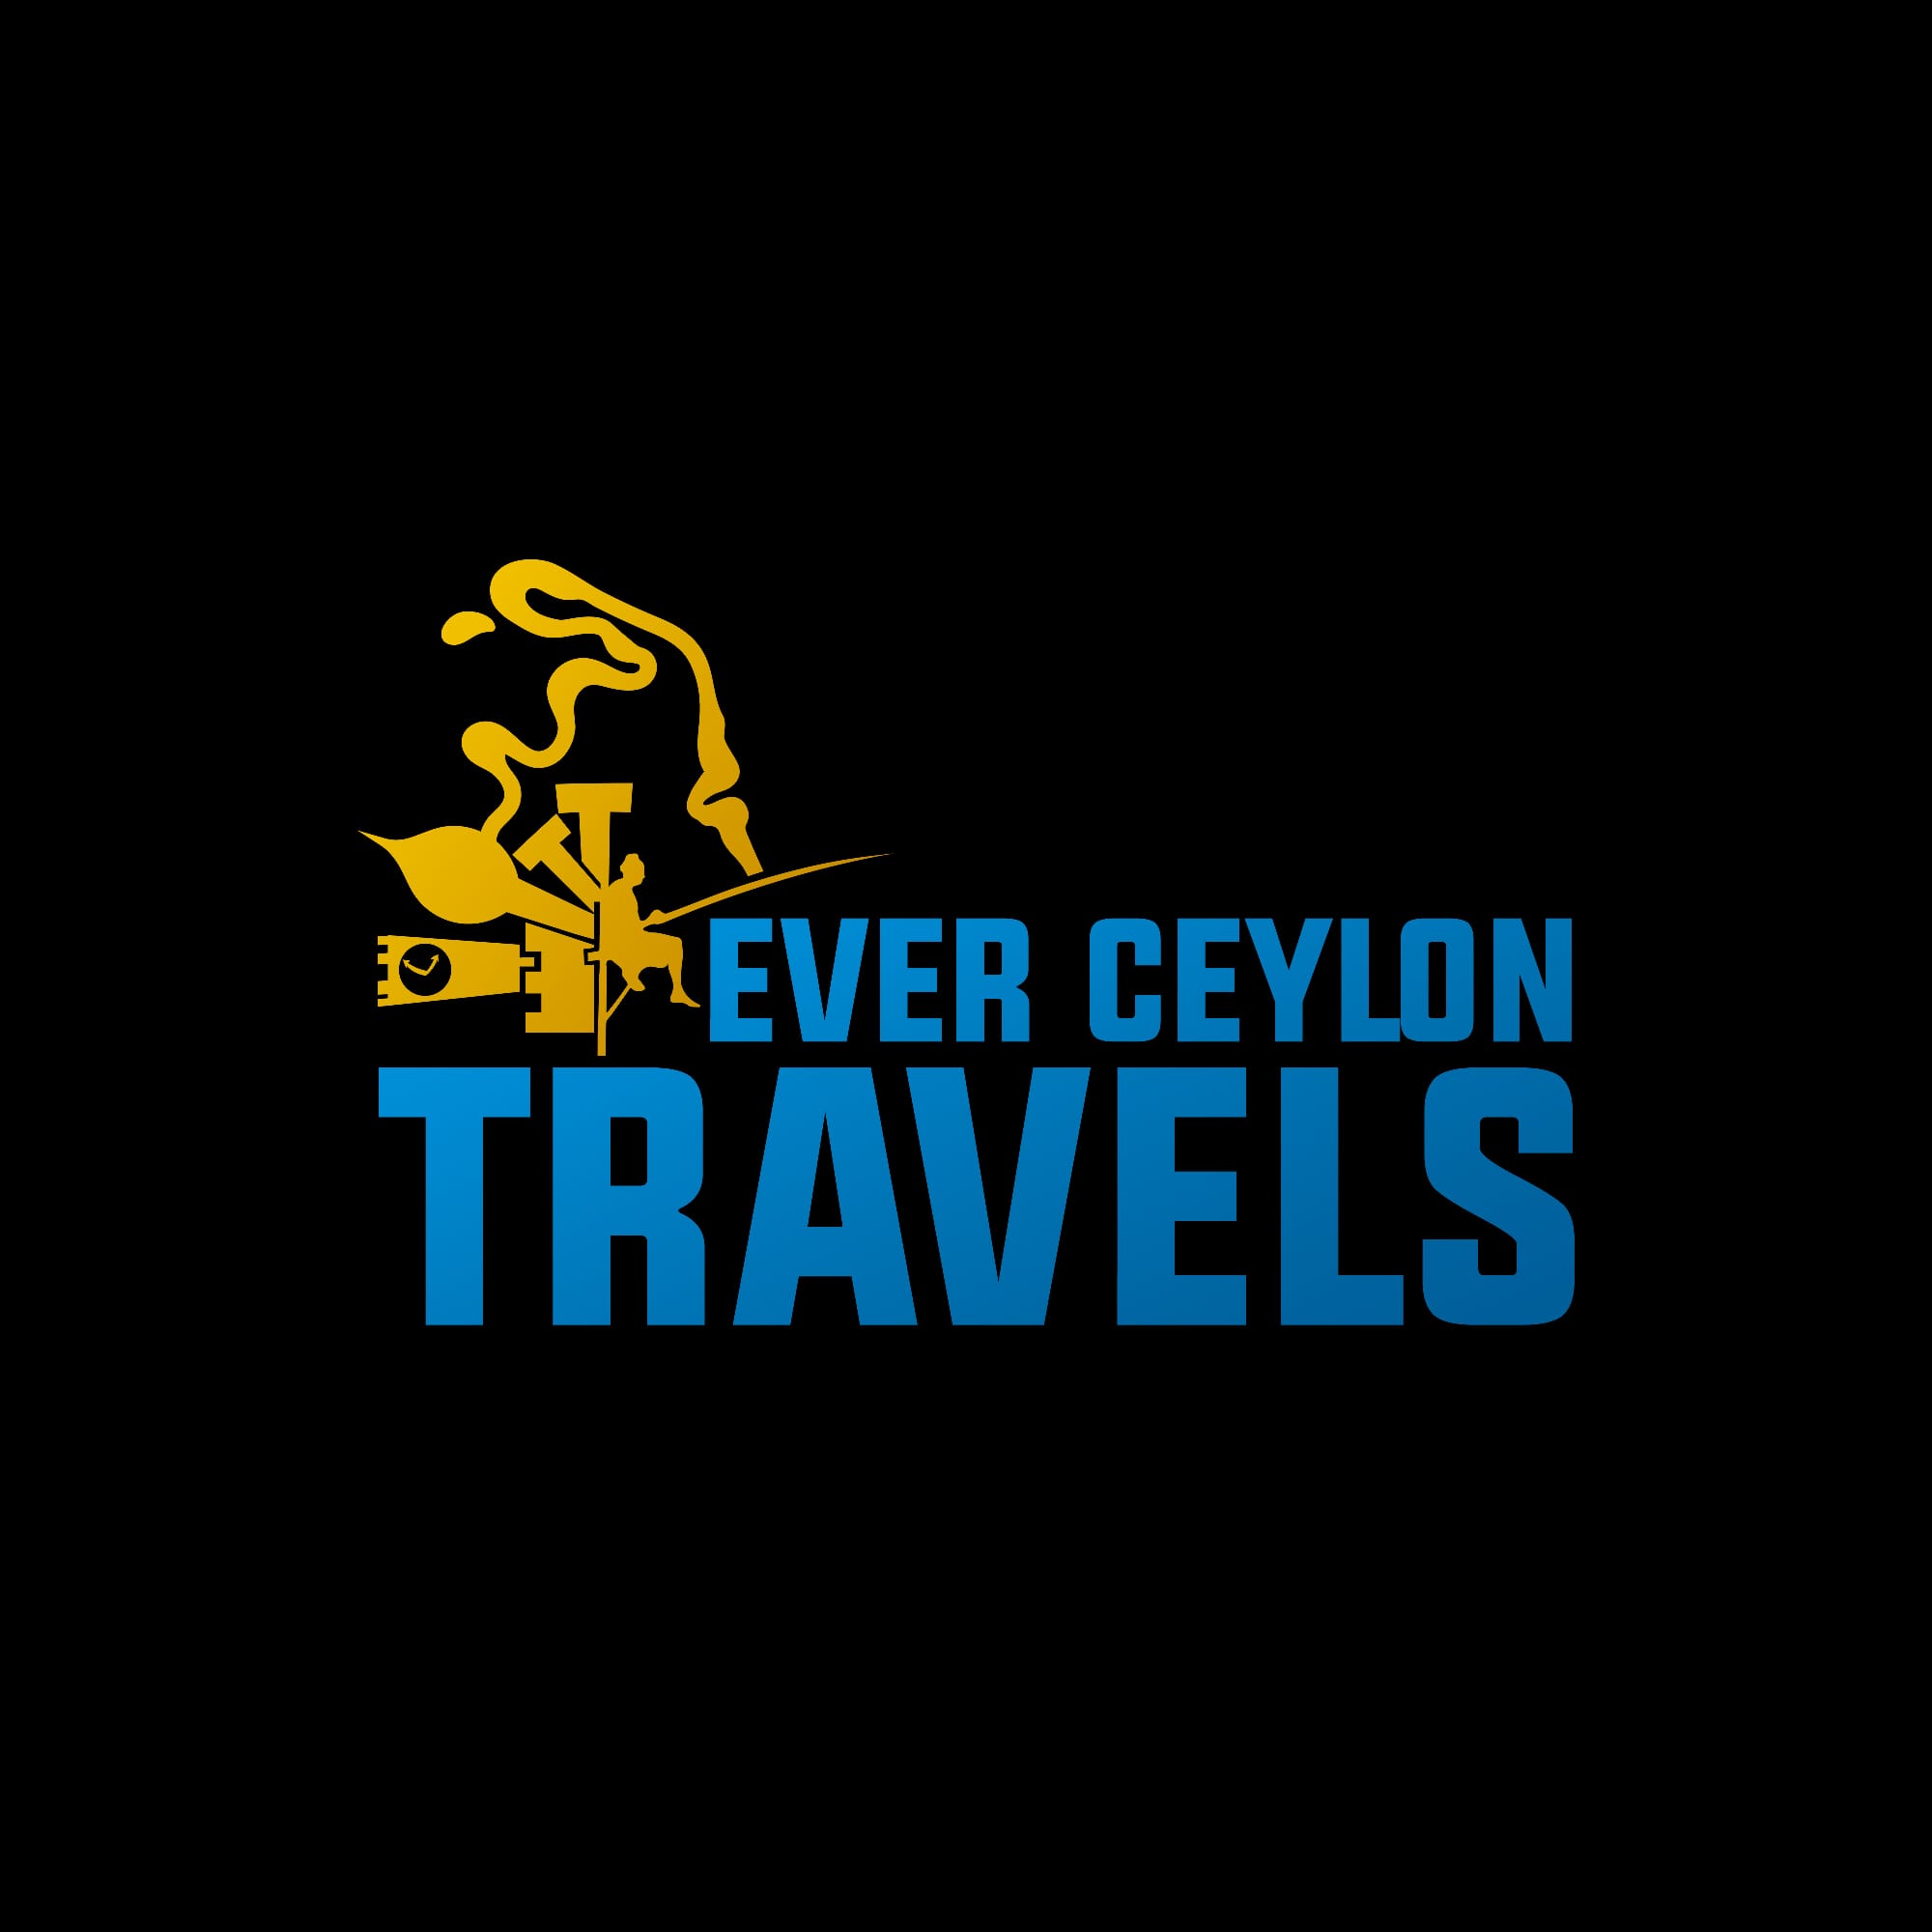 Ever Ceylon Travels